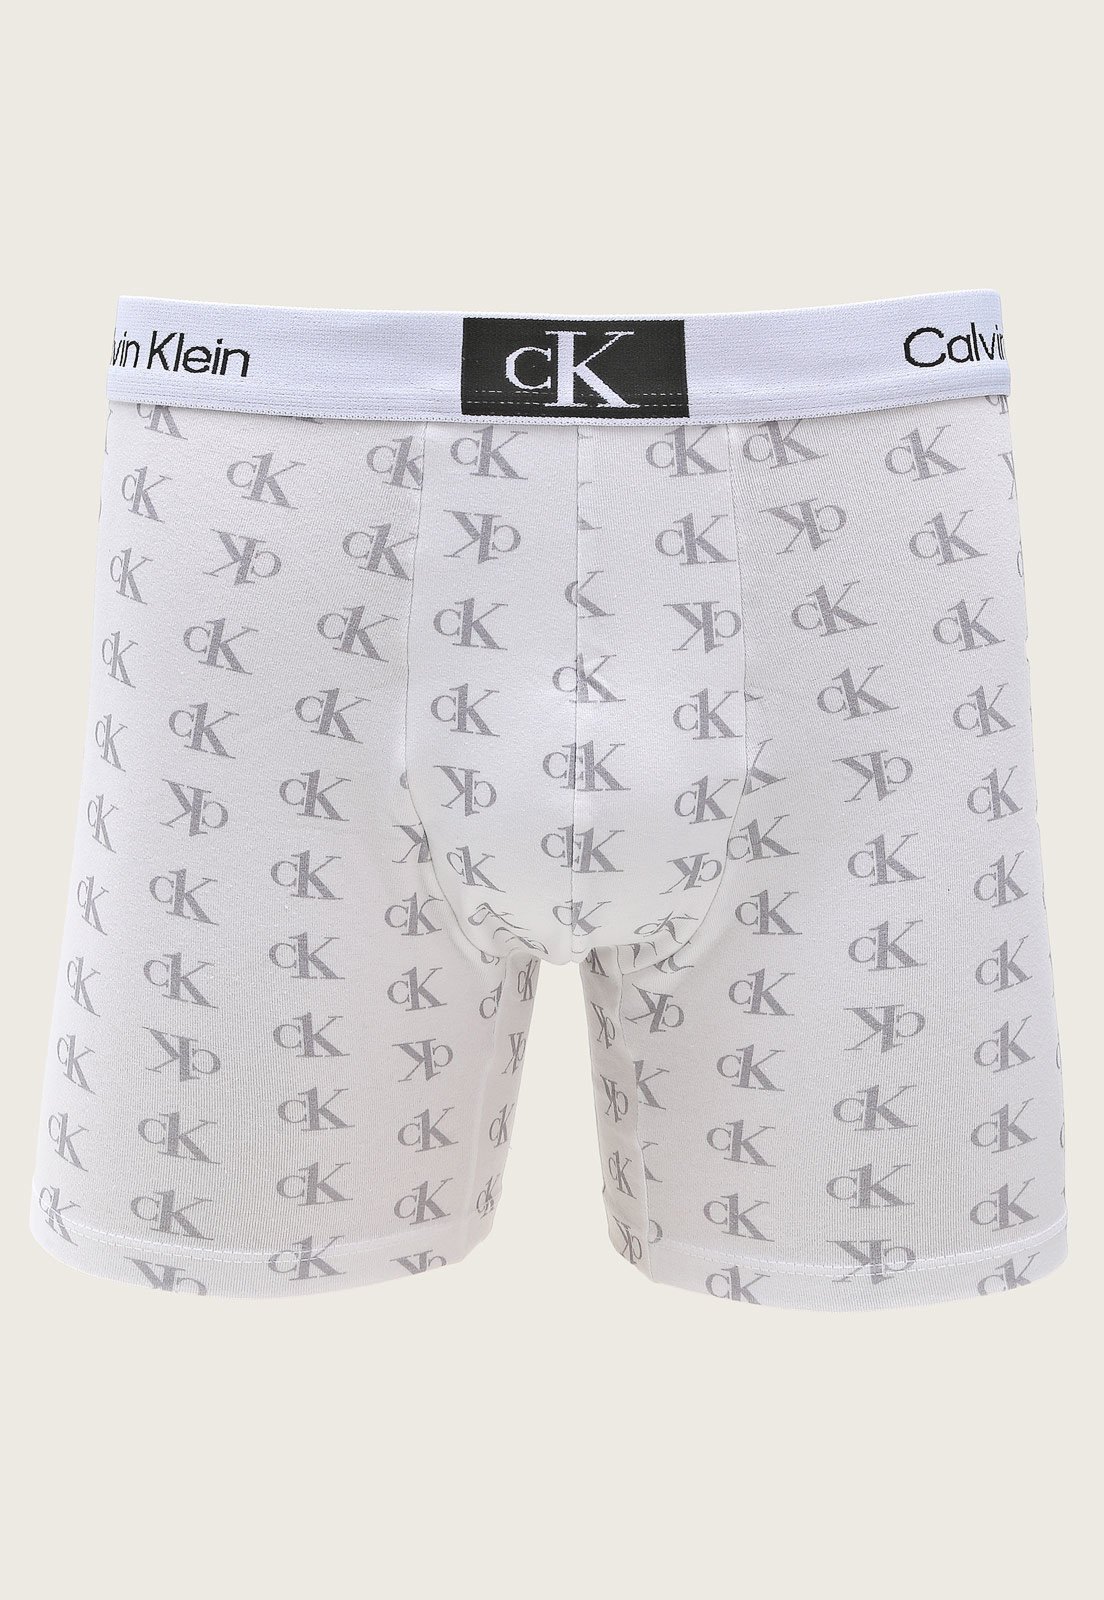 Calvin Klein CK 96 boxer shorts in white